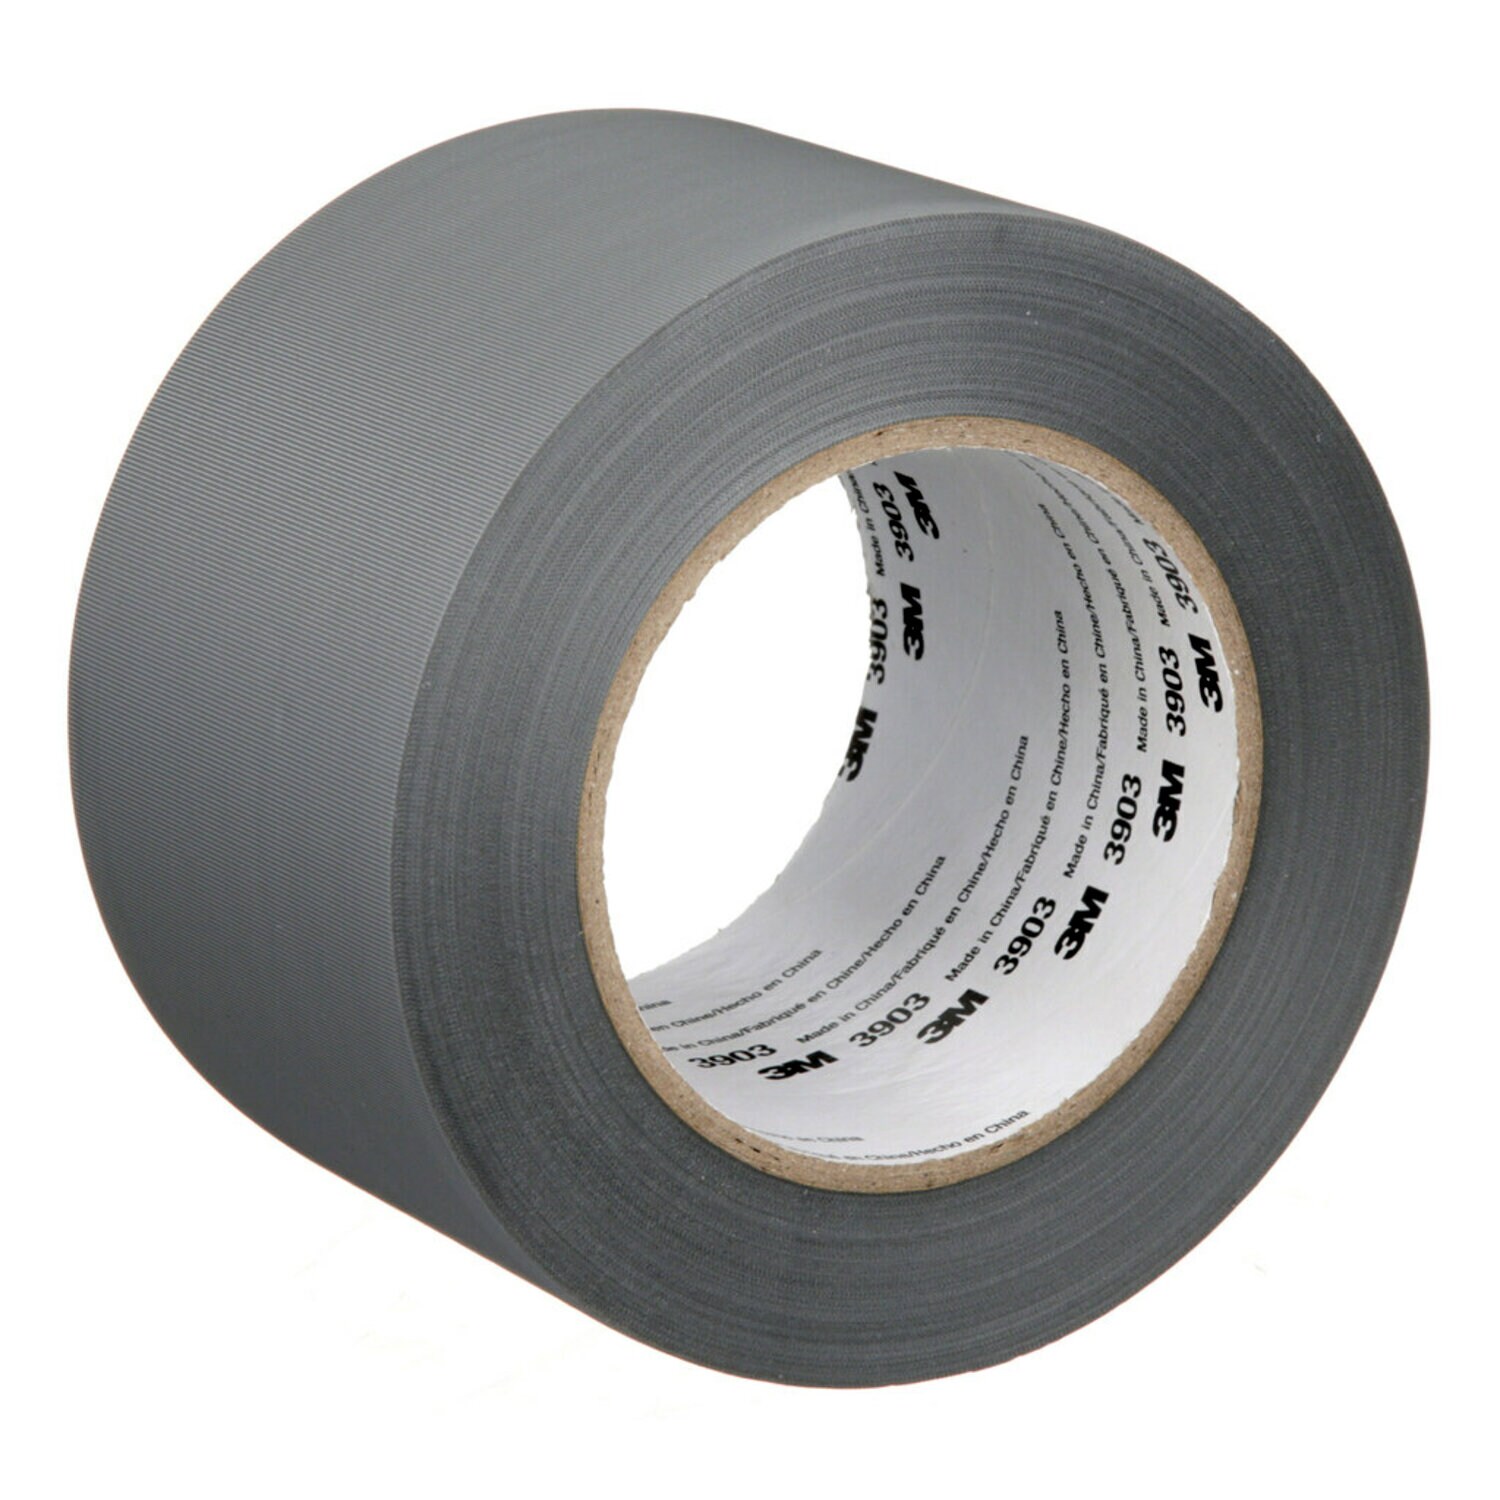 7100152407 - 3M Vinyl Duct Tape 3903, Gray, 3 in x 50 yd, 6.5 mil, 18 Rolls/Case,